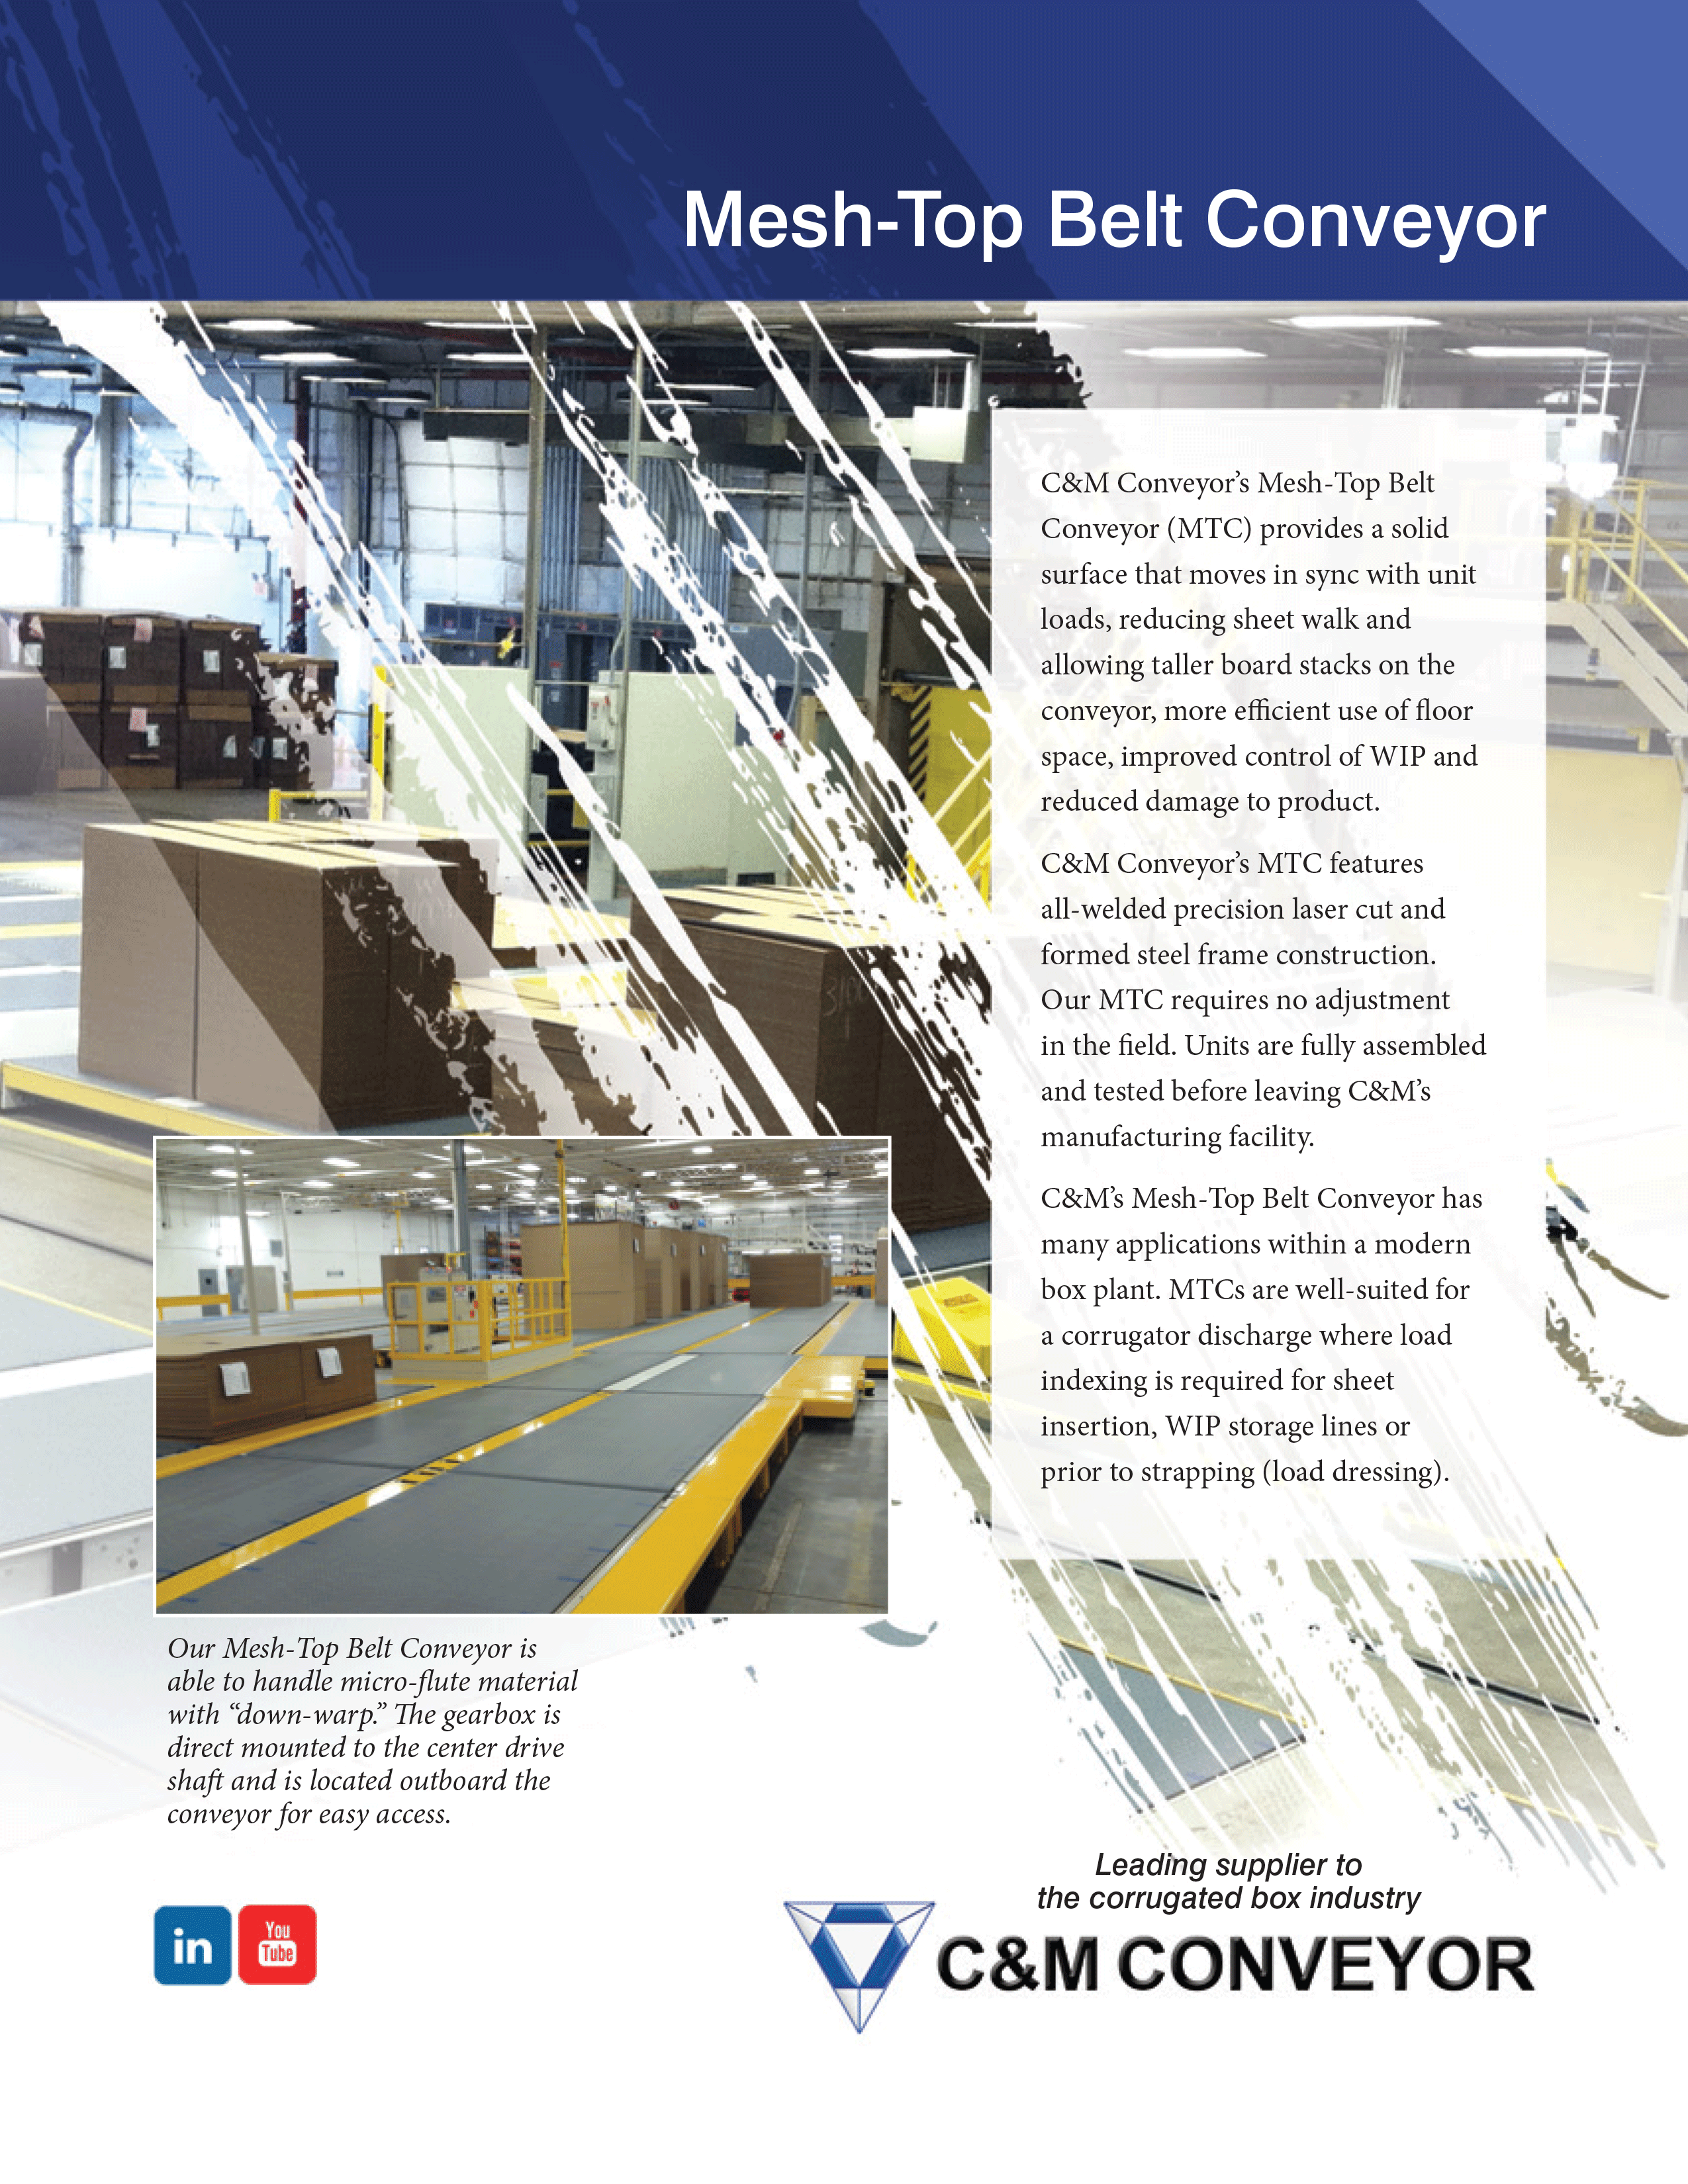 Learn more with C & M’s Mesh-Top Belt Conveyor Brochure 